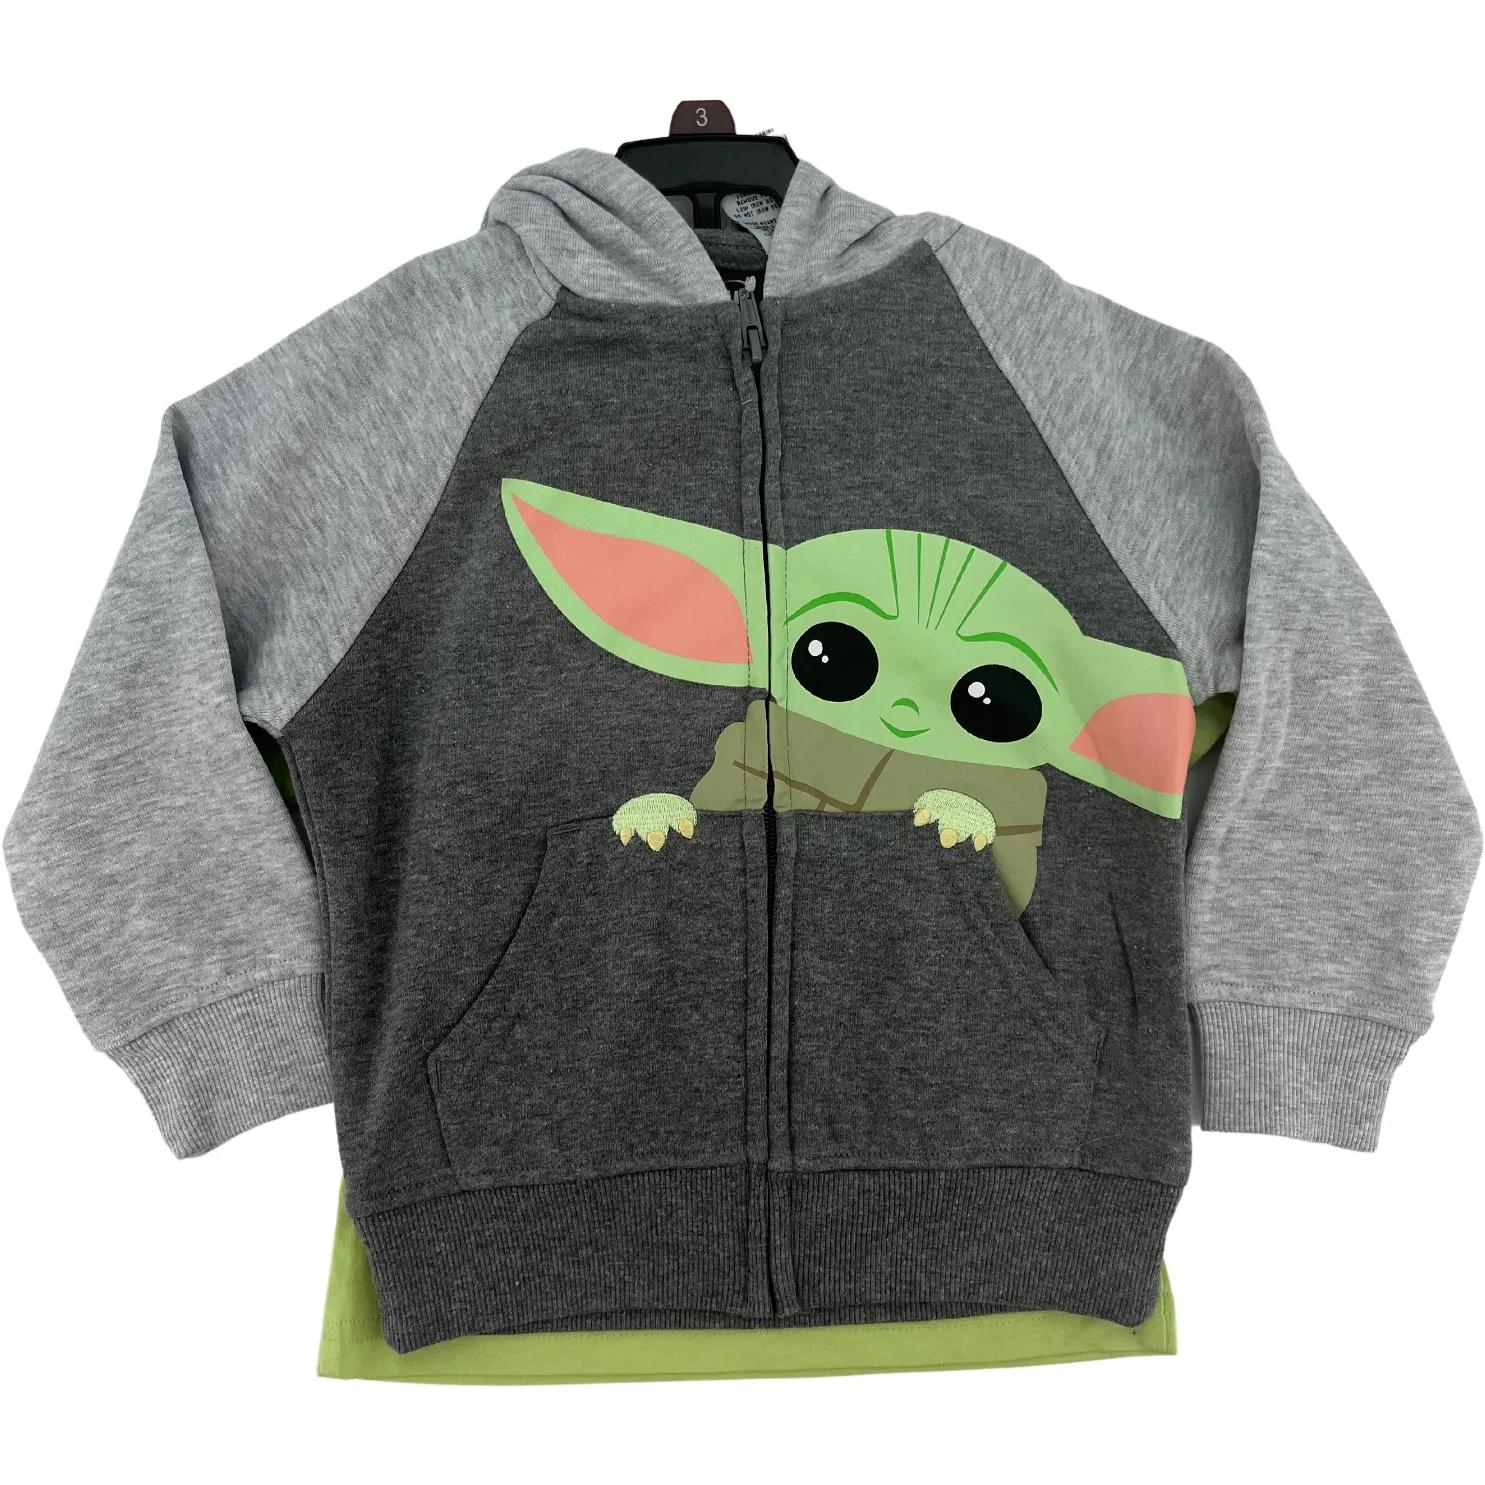 Star Wars Girl's & Boy's Top Set: T-Shirt / Sweater / 2 Pack / Size 3